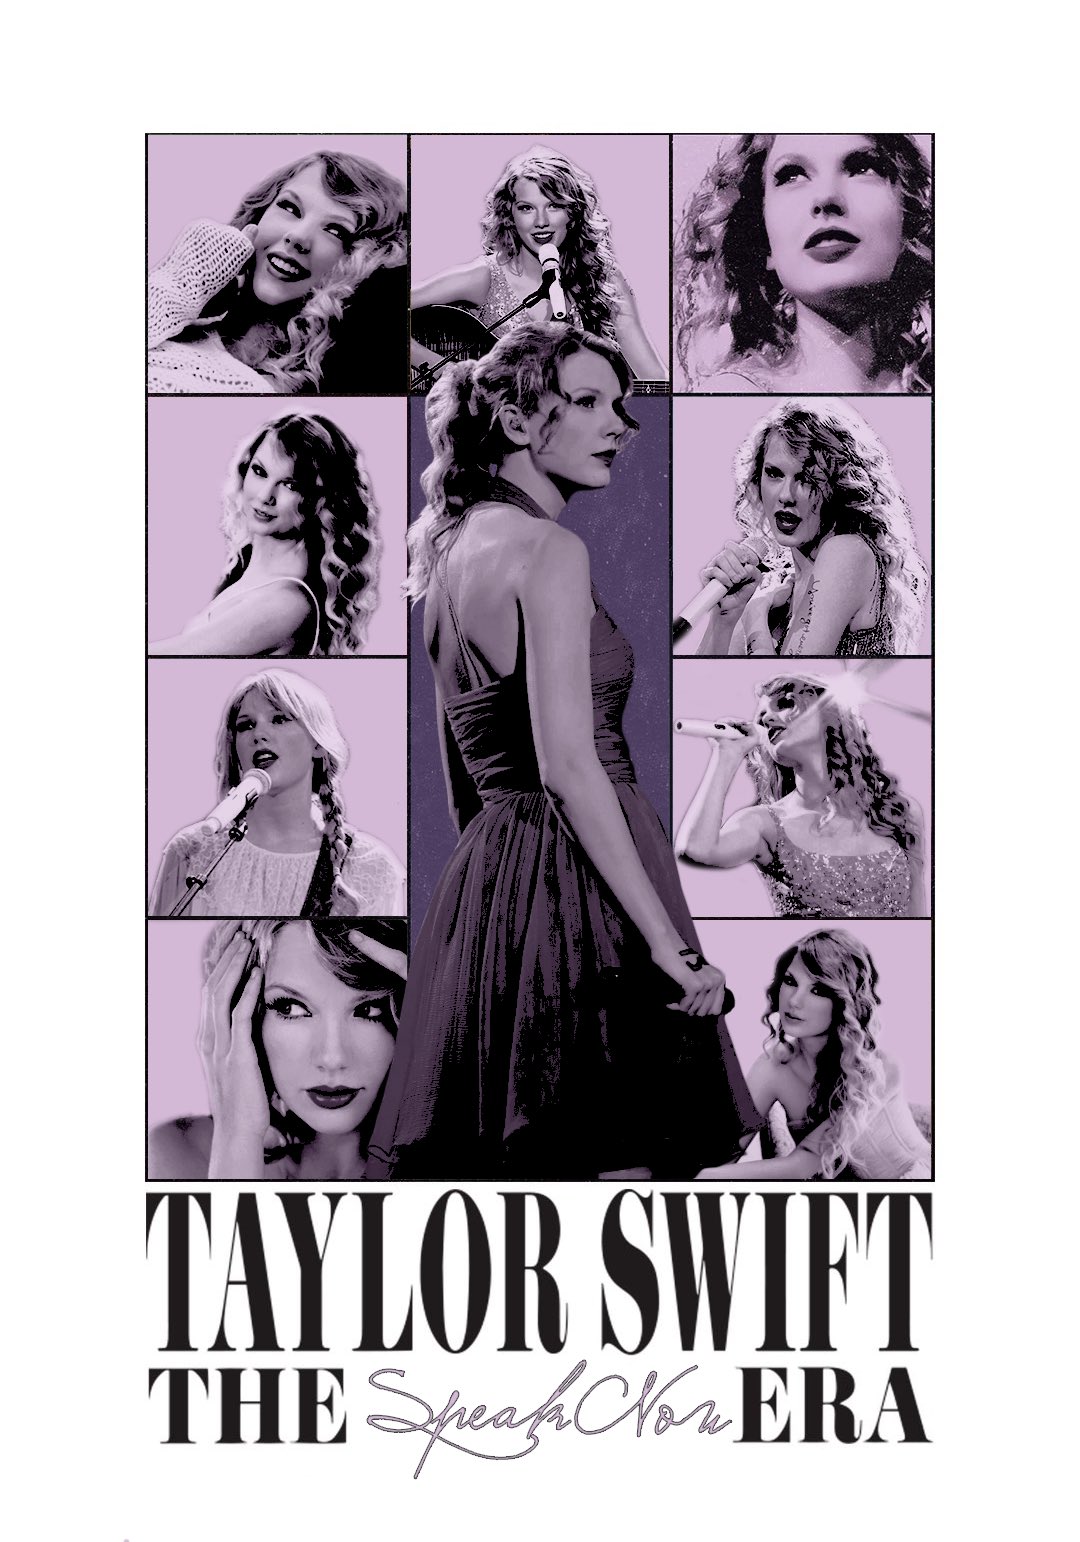 Taylor Swift Eras Tour Poster Las Vegas